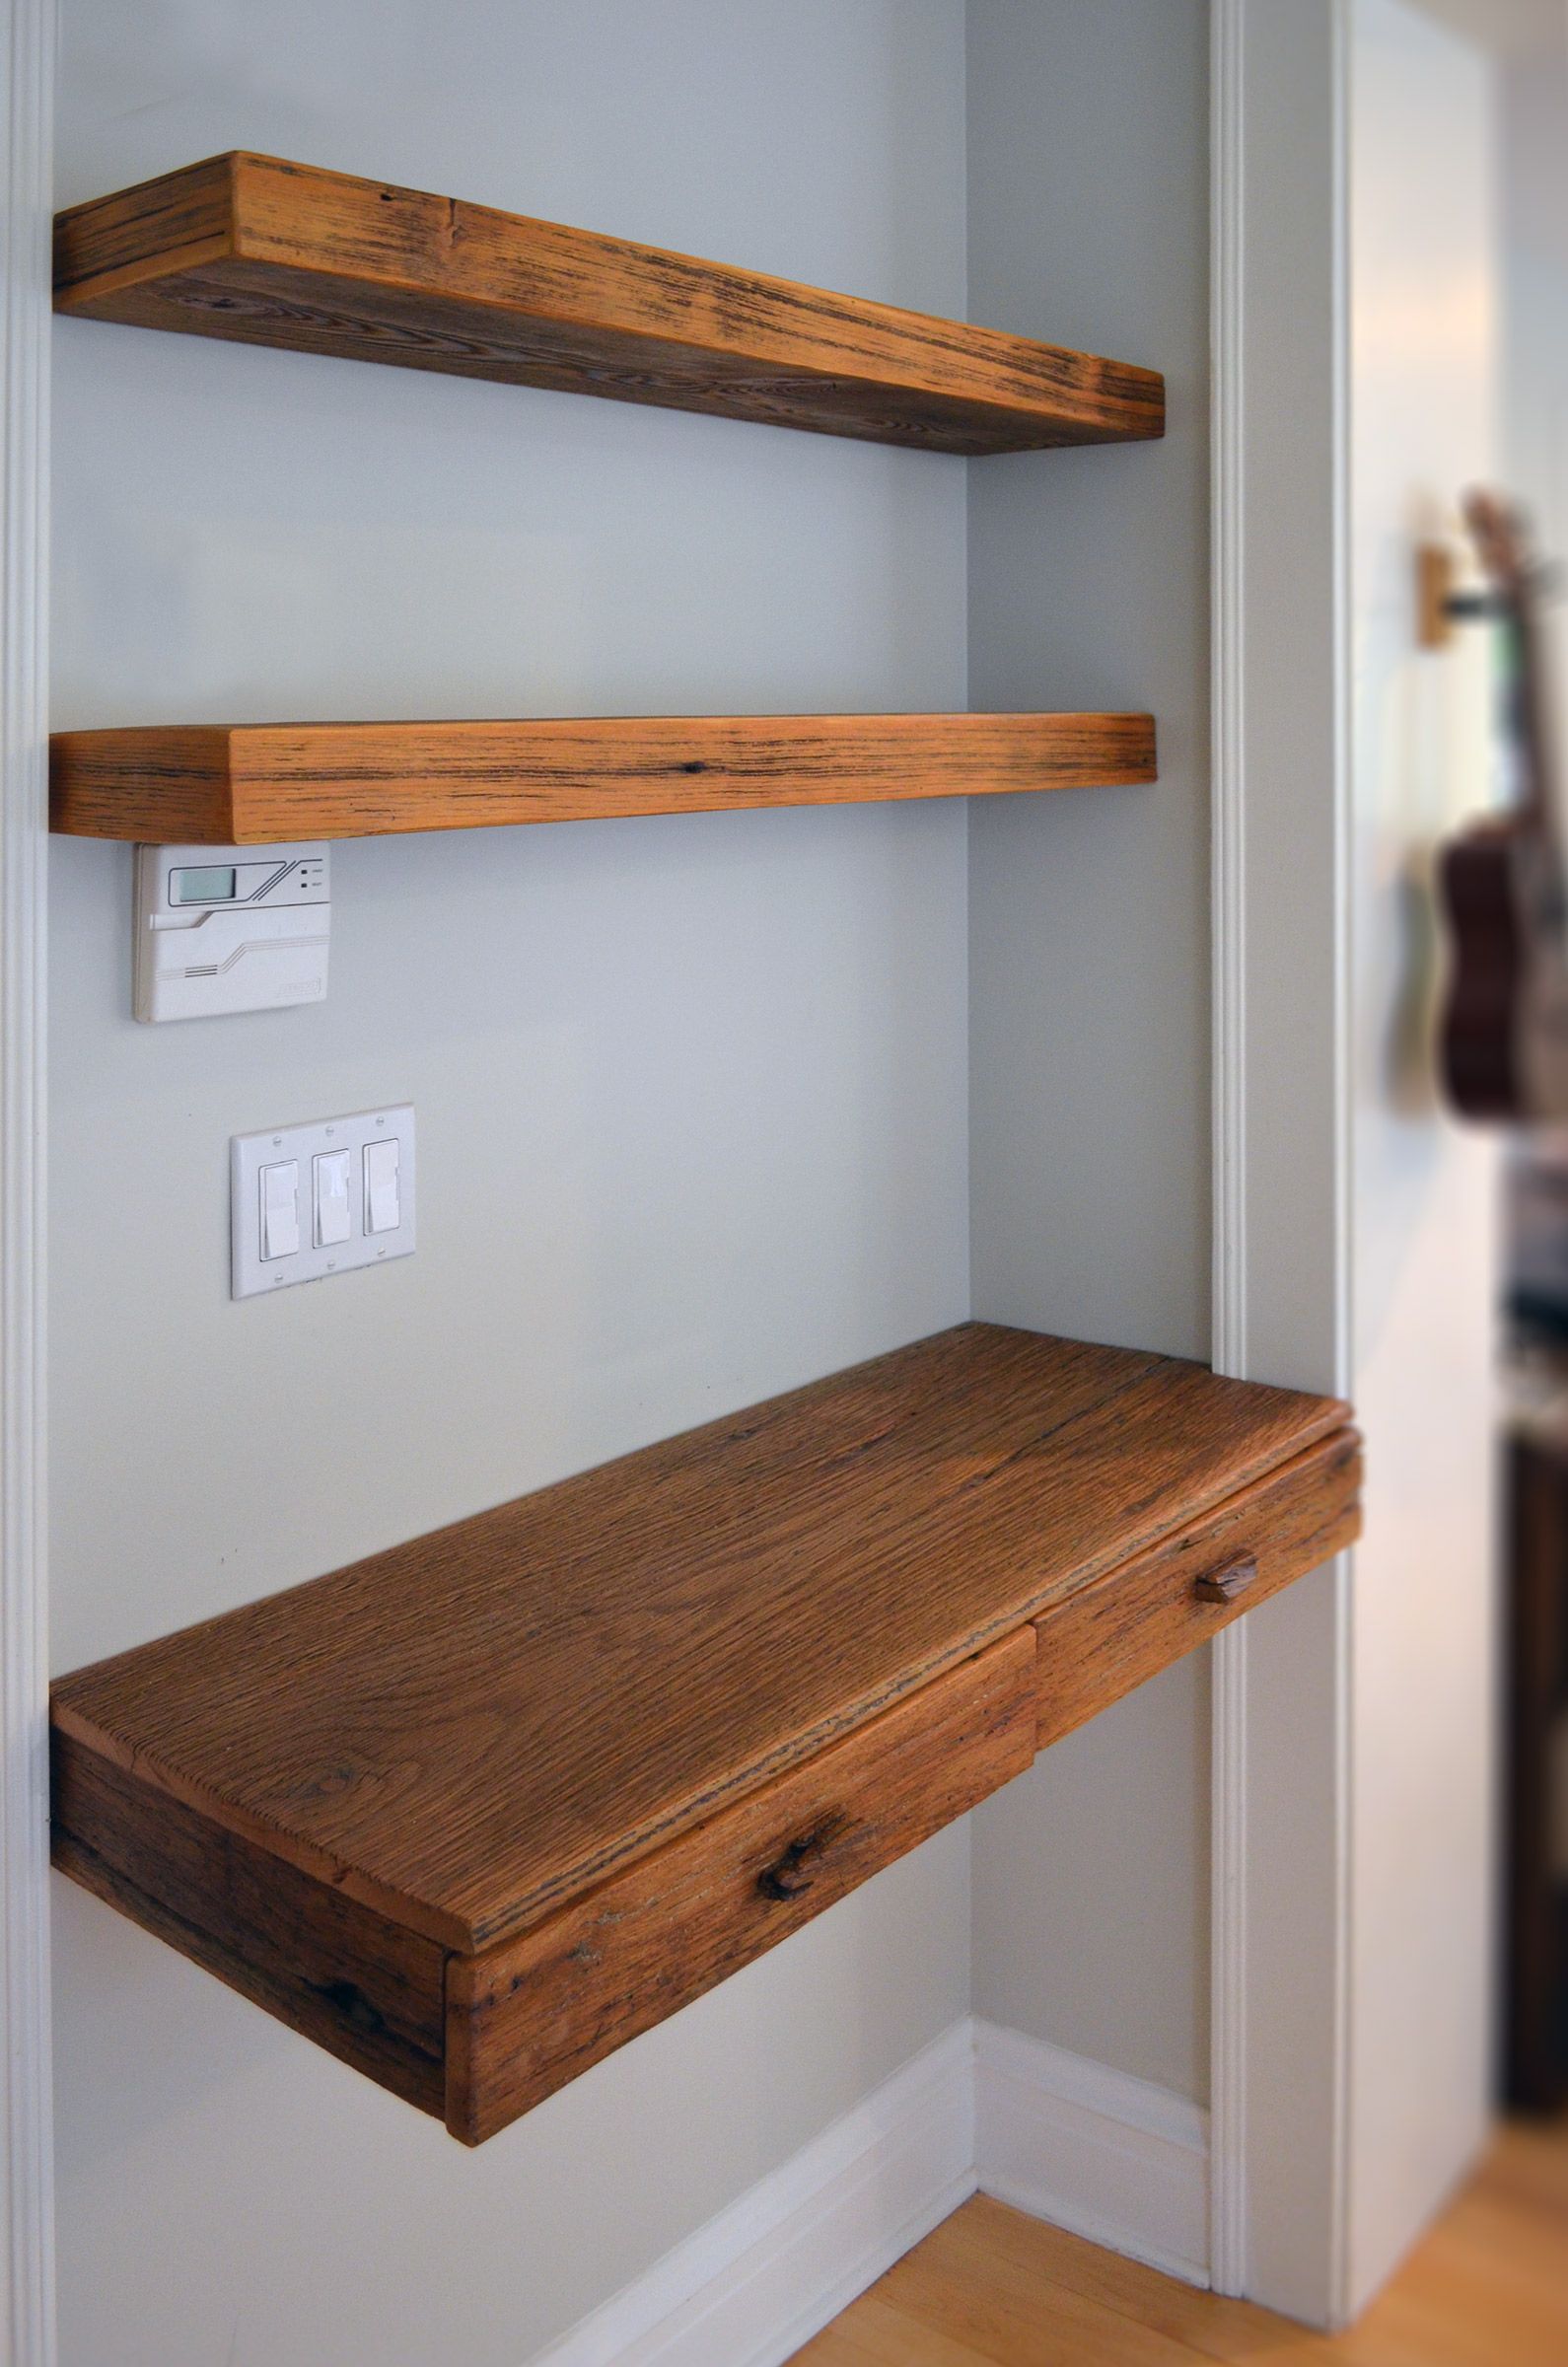 Custom Made Reclaimed Wood Desk And Shelves Construction